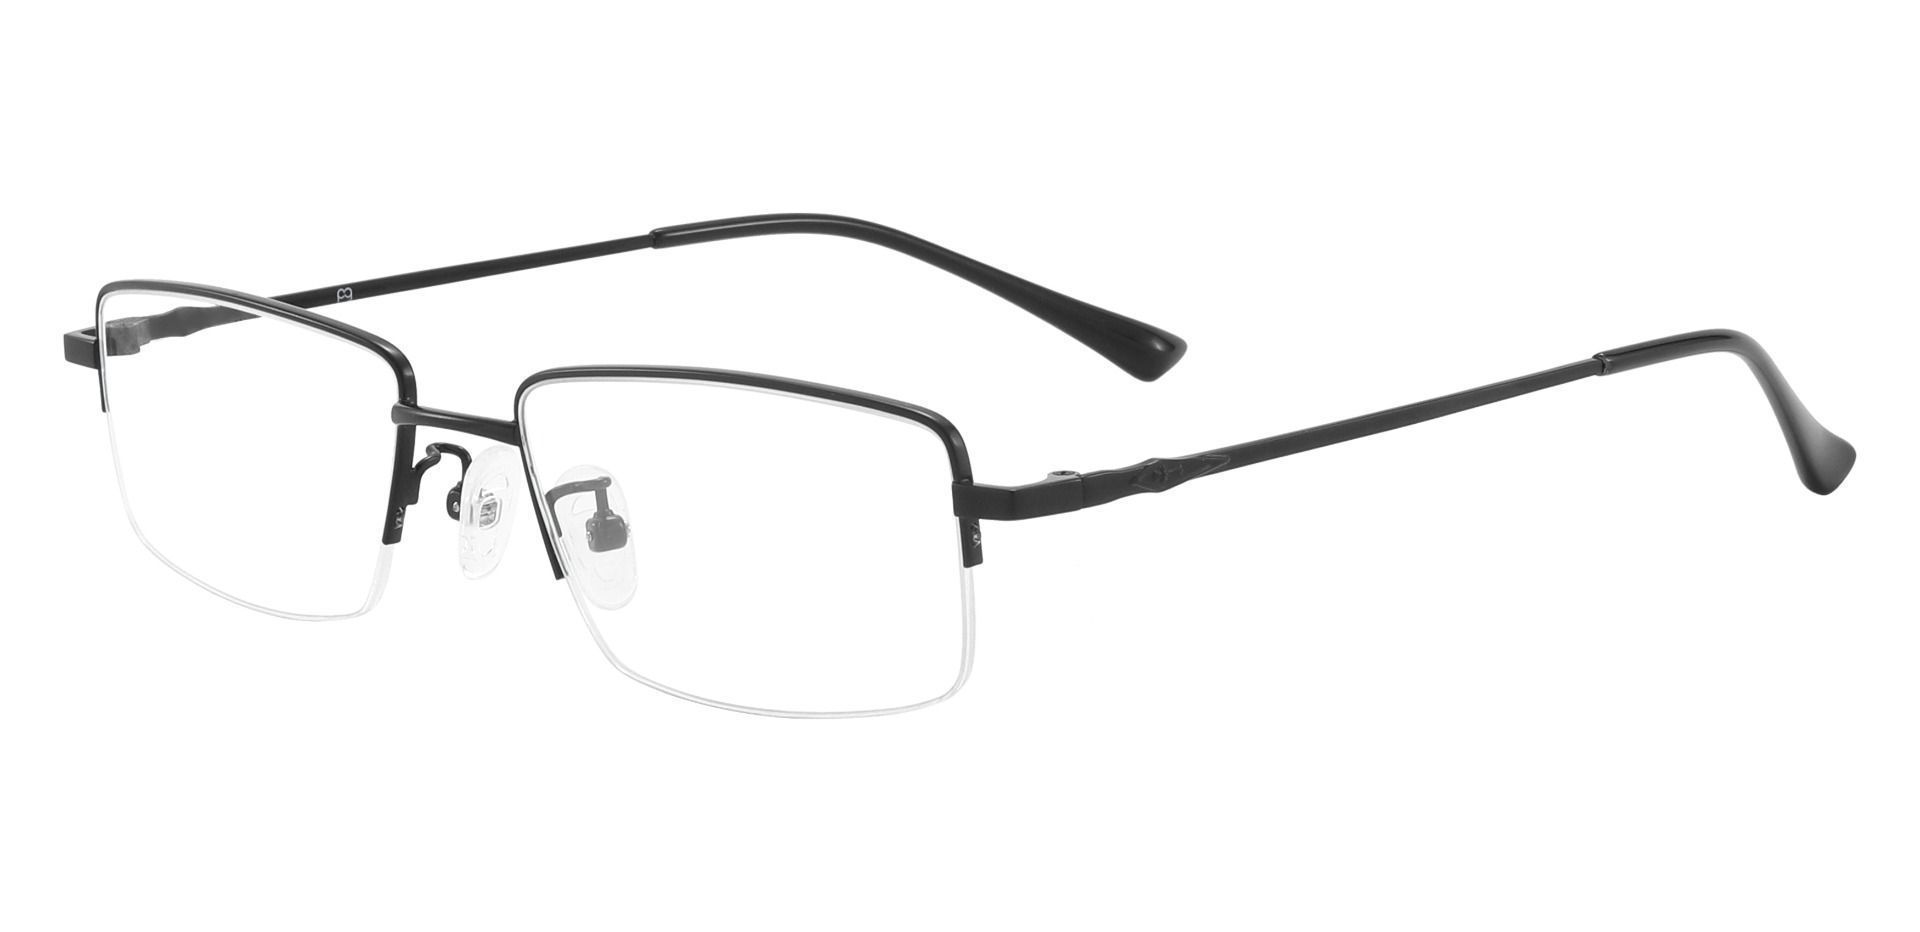 Waldo Rectangle Eyeglasses Frame - Black